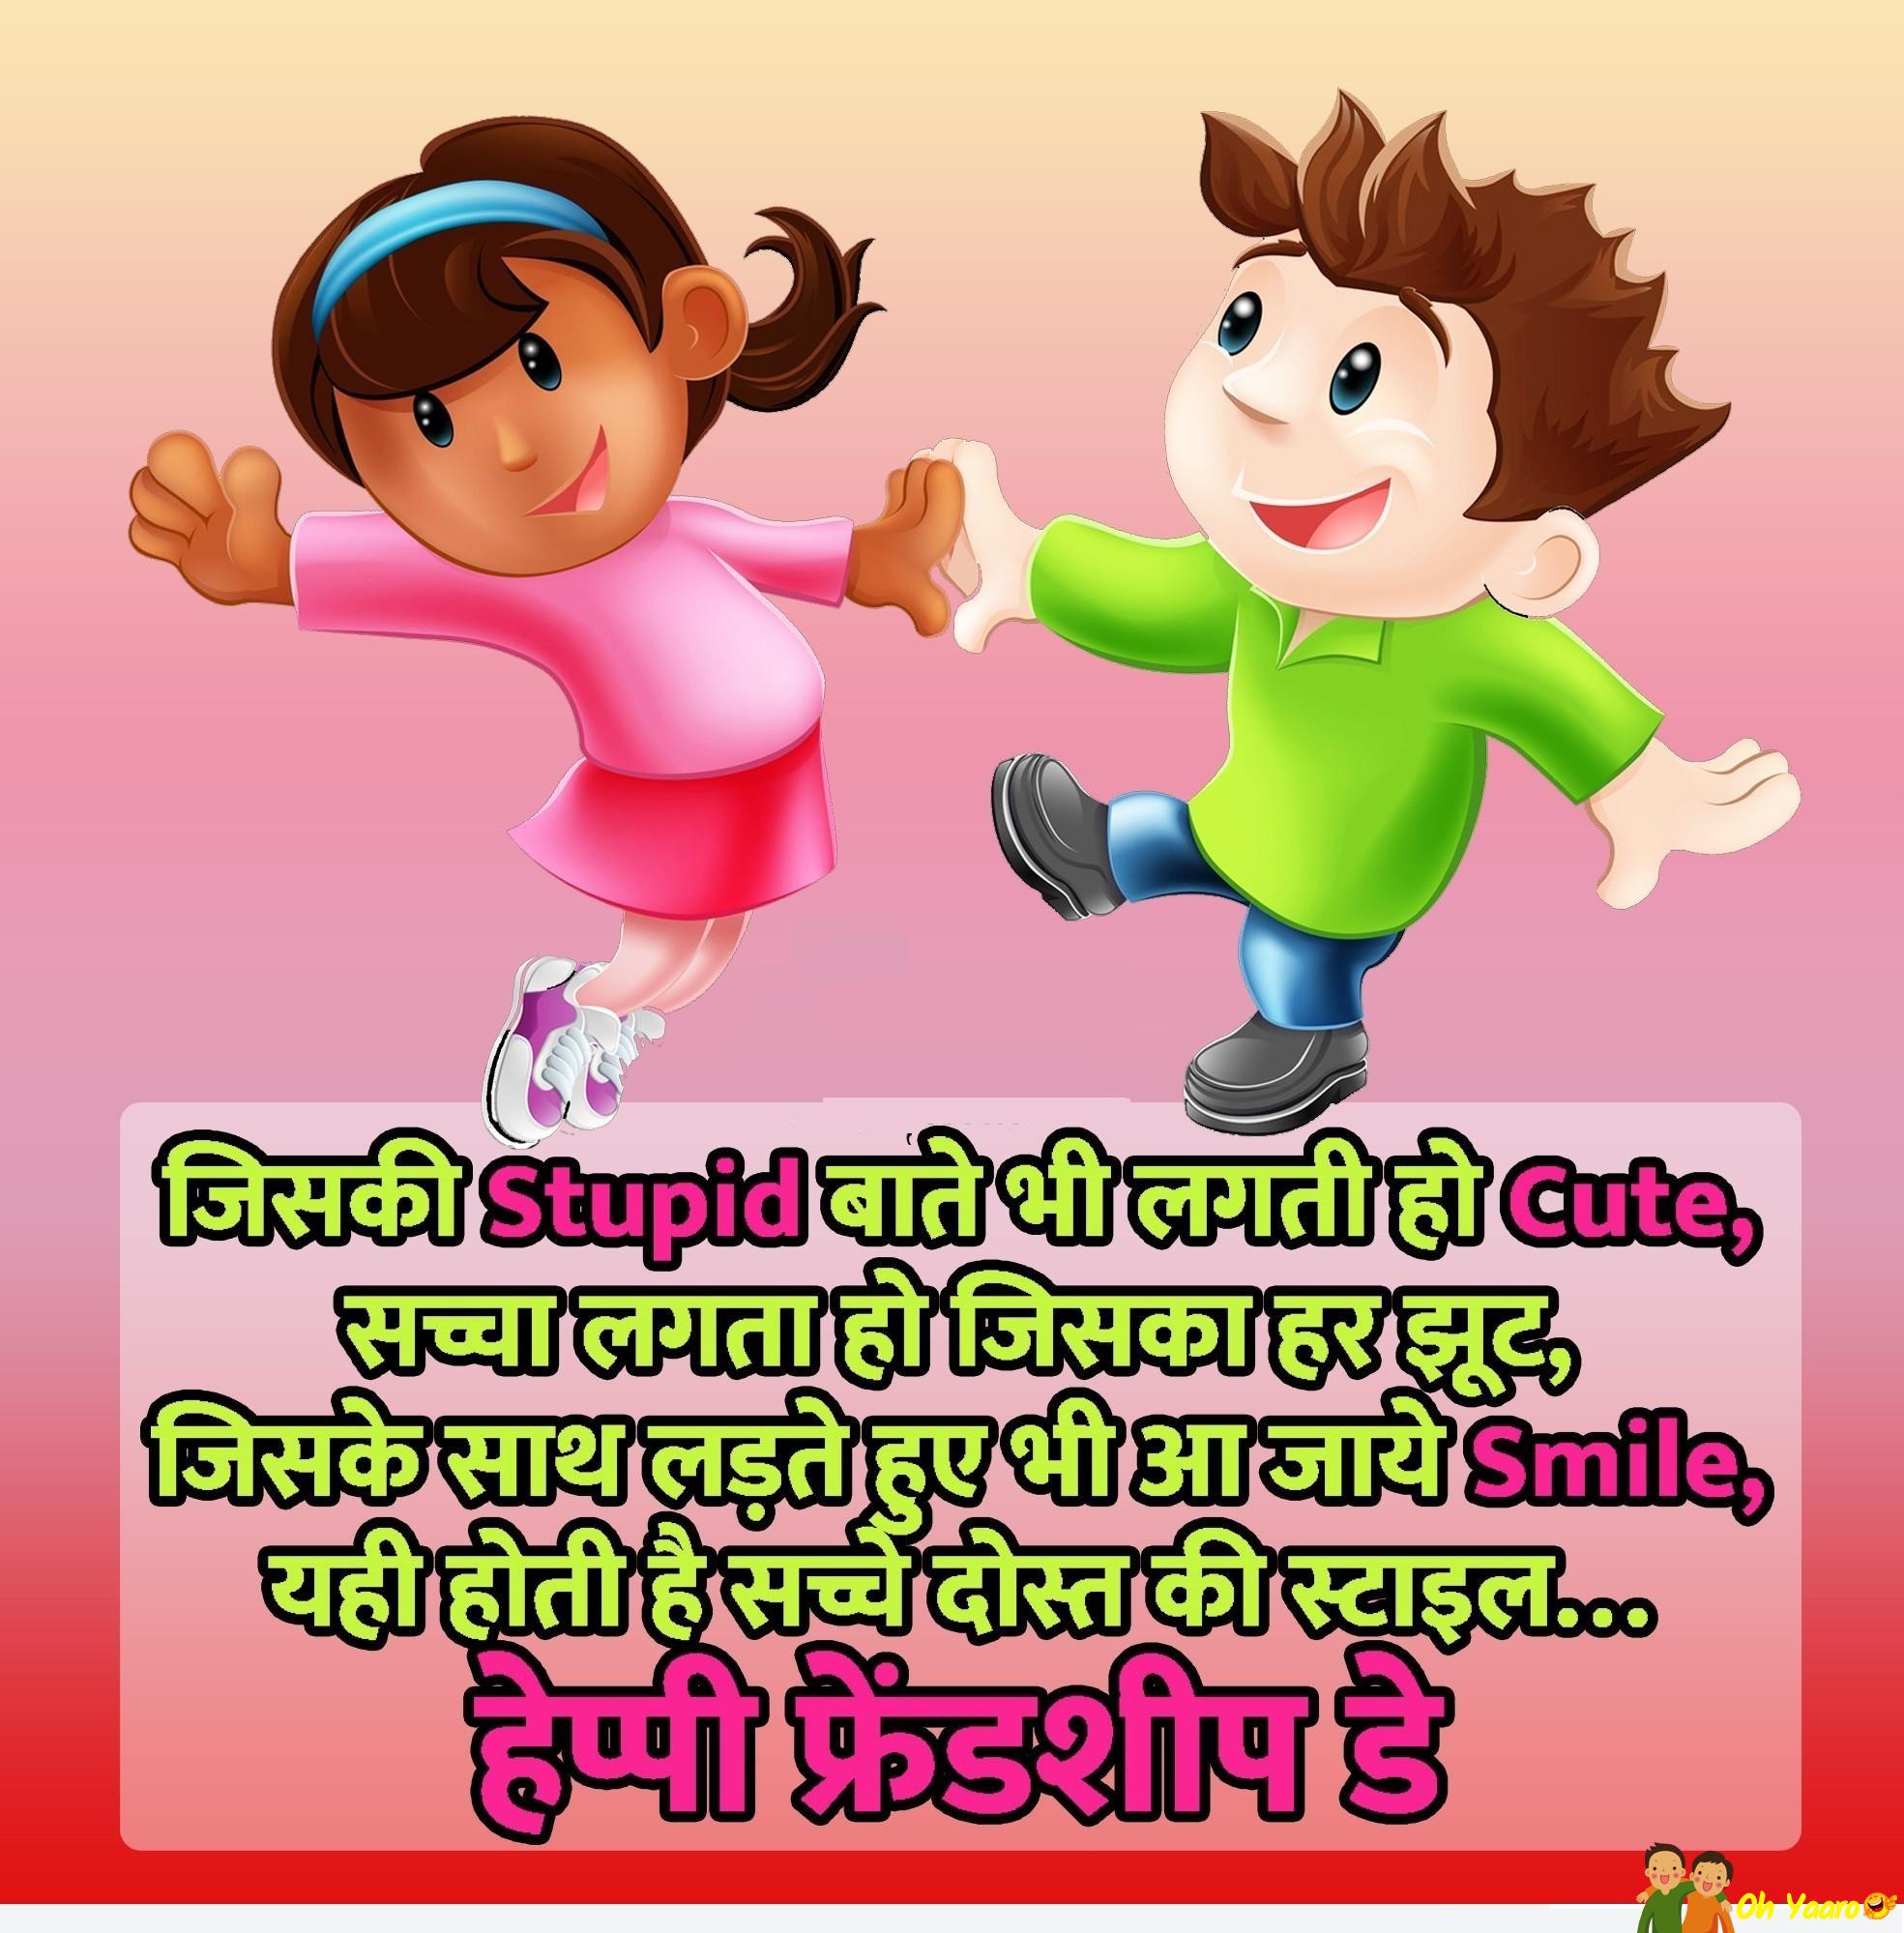 Friendship Day Shayari In Hindi - Happy Friendship Day Quotes - Oh Yaaro